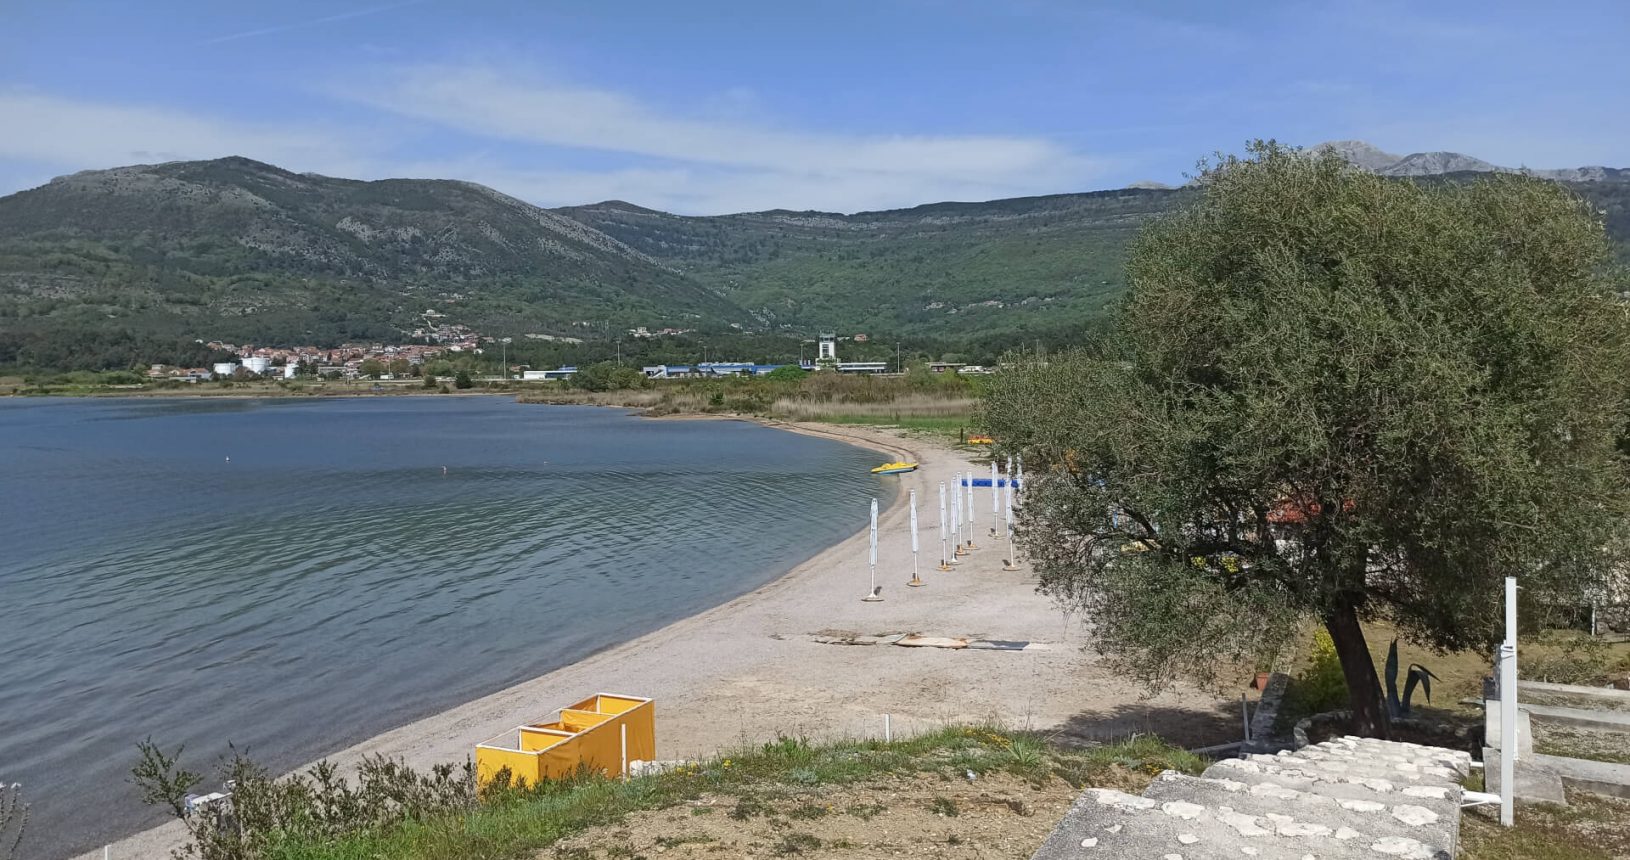 Entrance to Kalardovo beach. Riviera and airport view